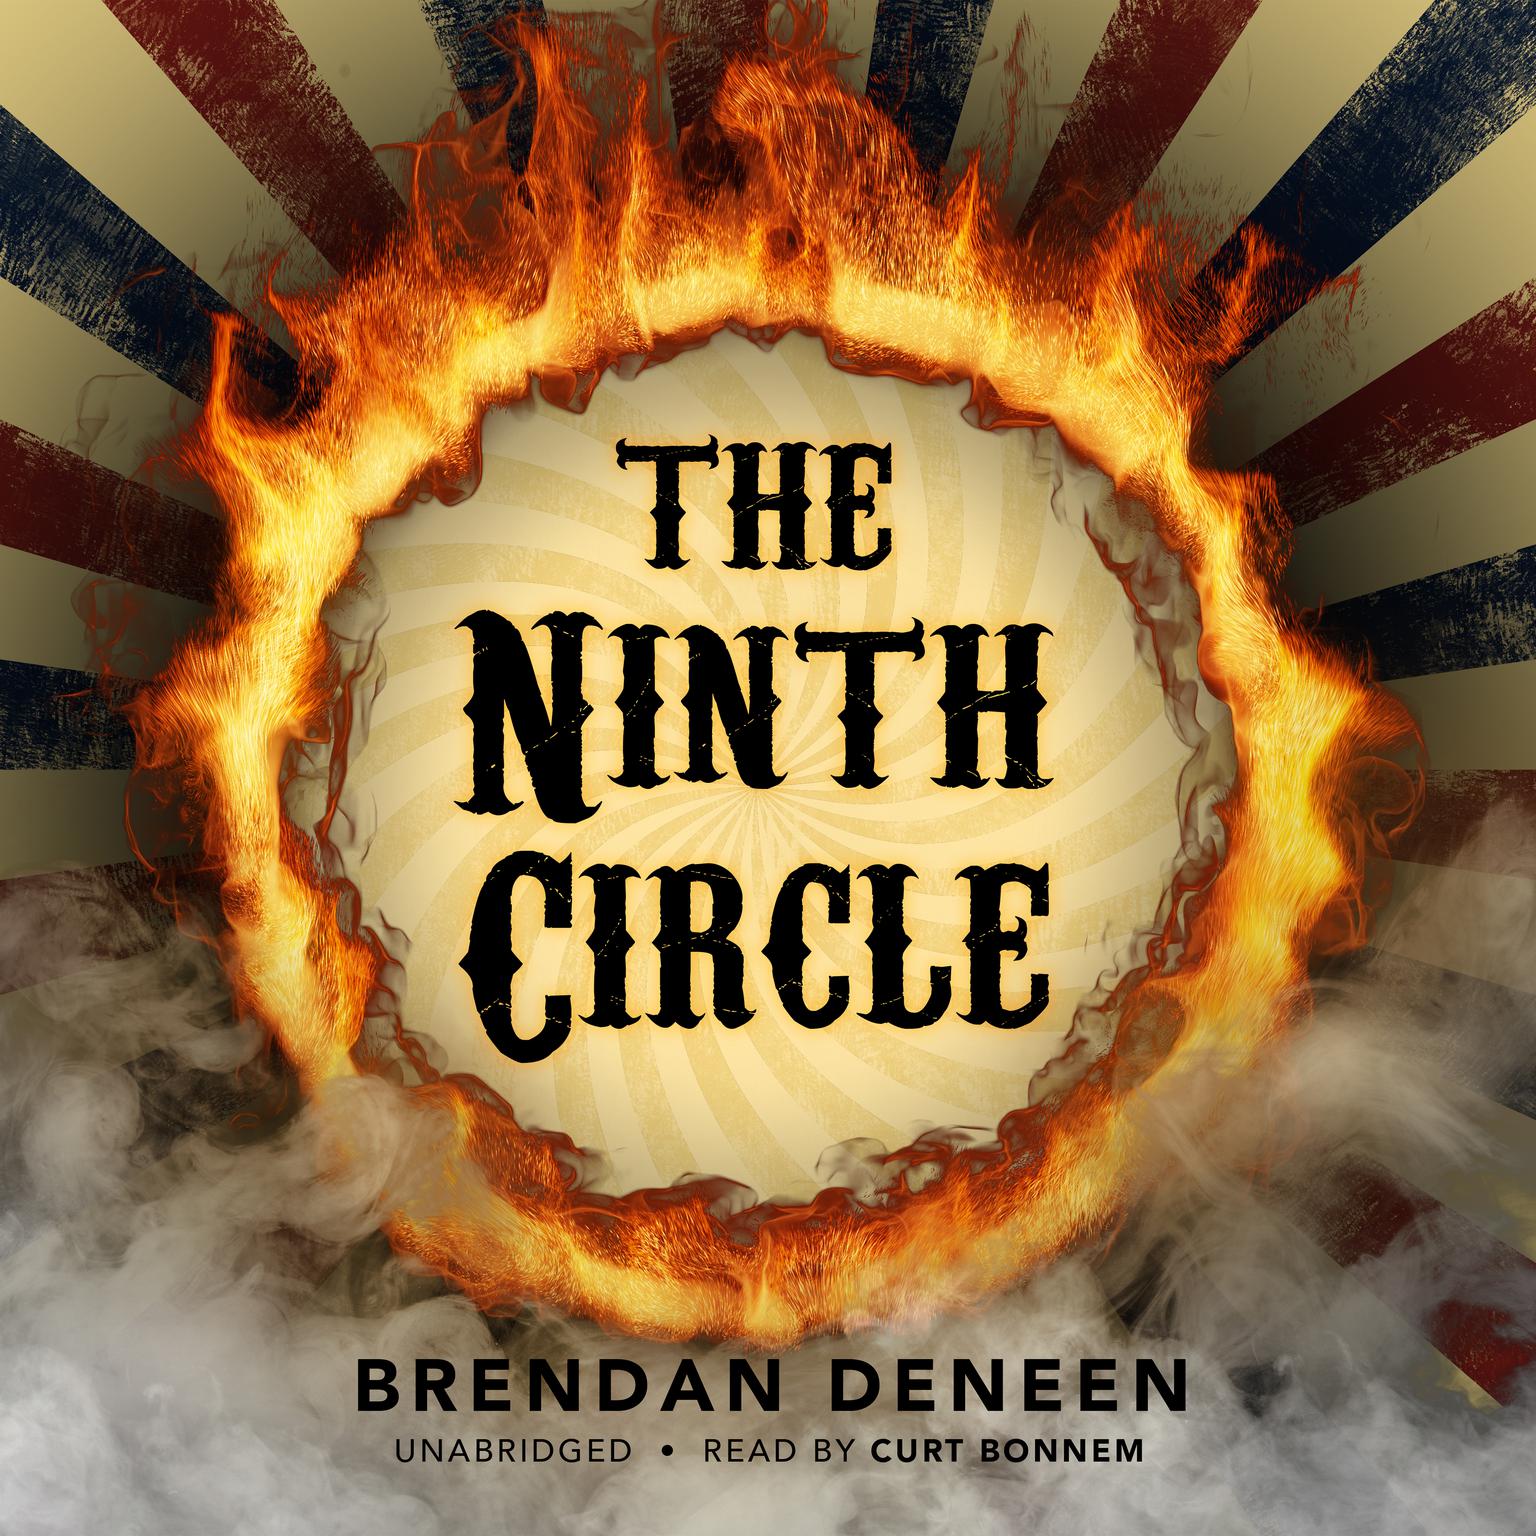 The Ninth Circle Audiobook, by Brendan Deneen